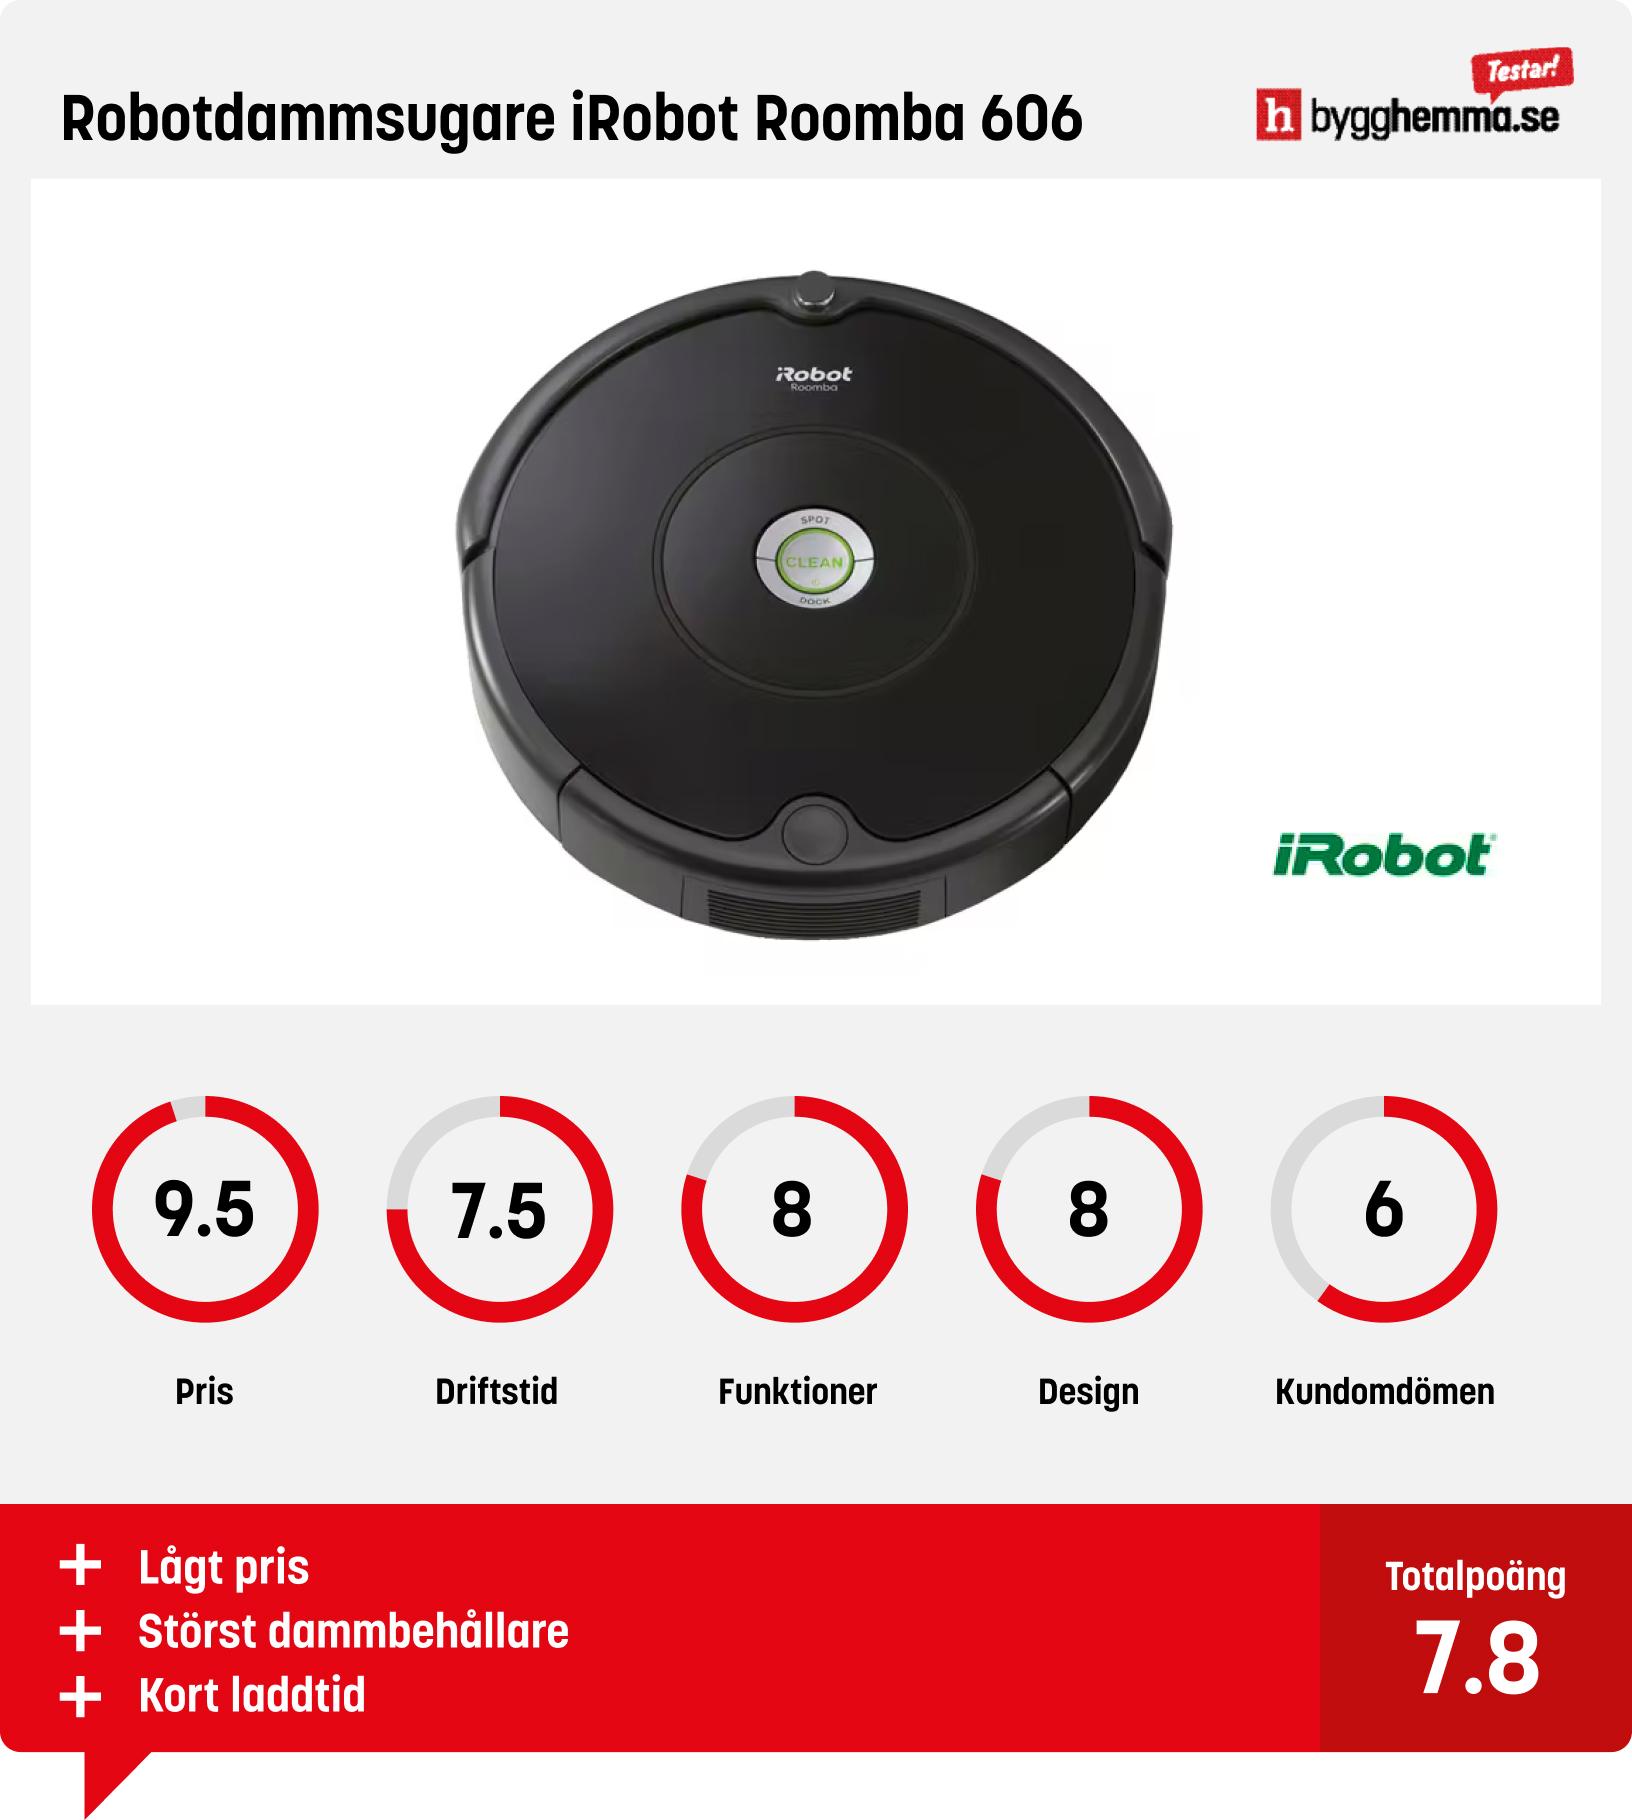 Robotdammsugare test iRobot Roomba 606